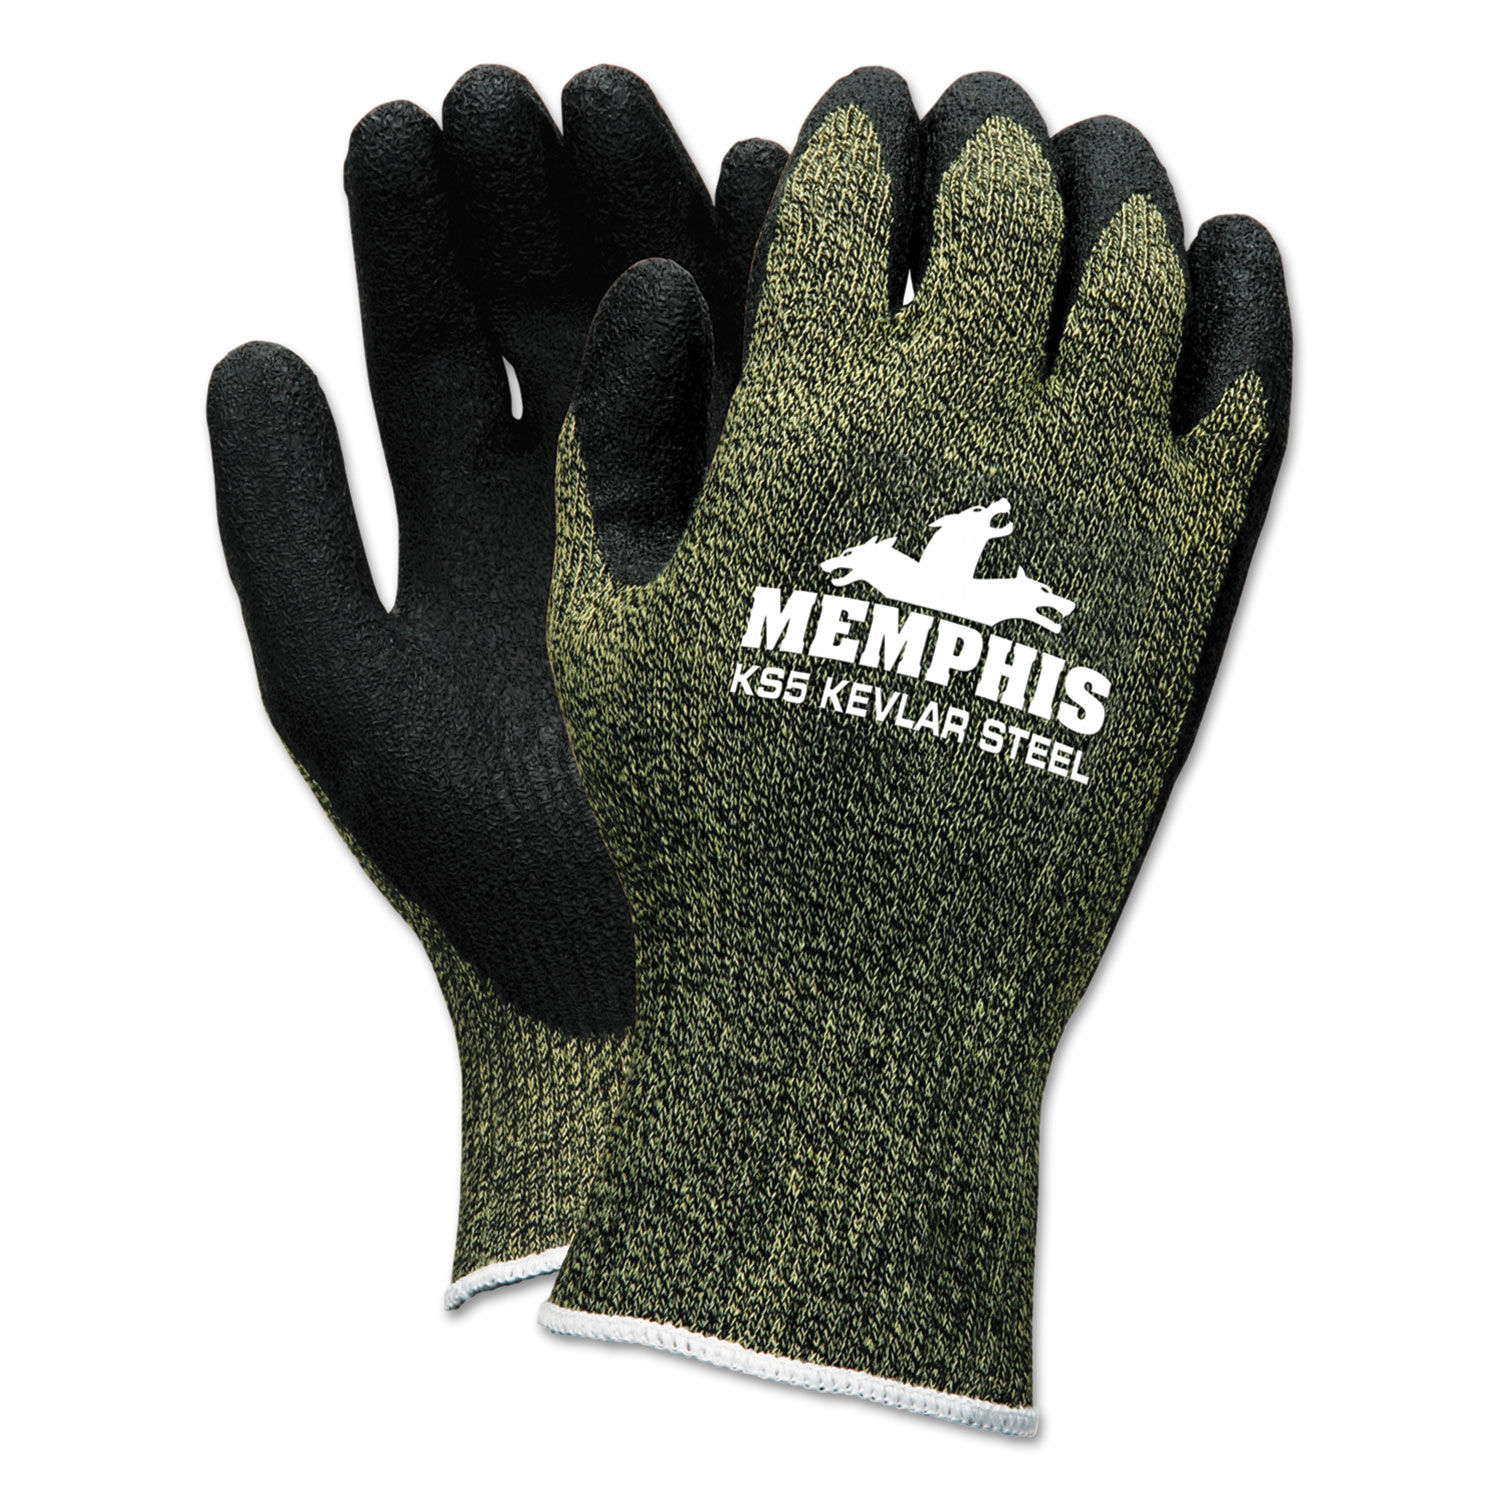 KS-5 Latex Dip Gloves 13 gauge, Green Black, Small